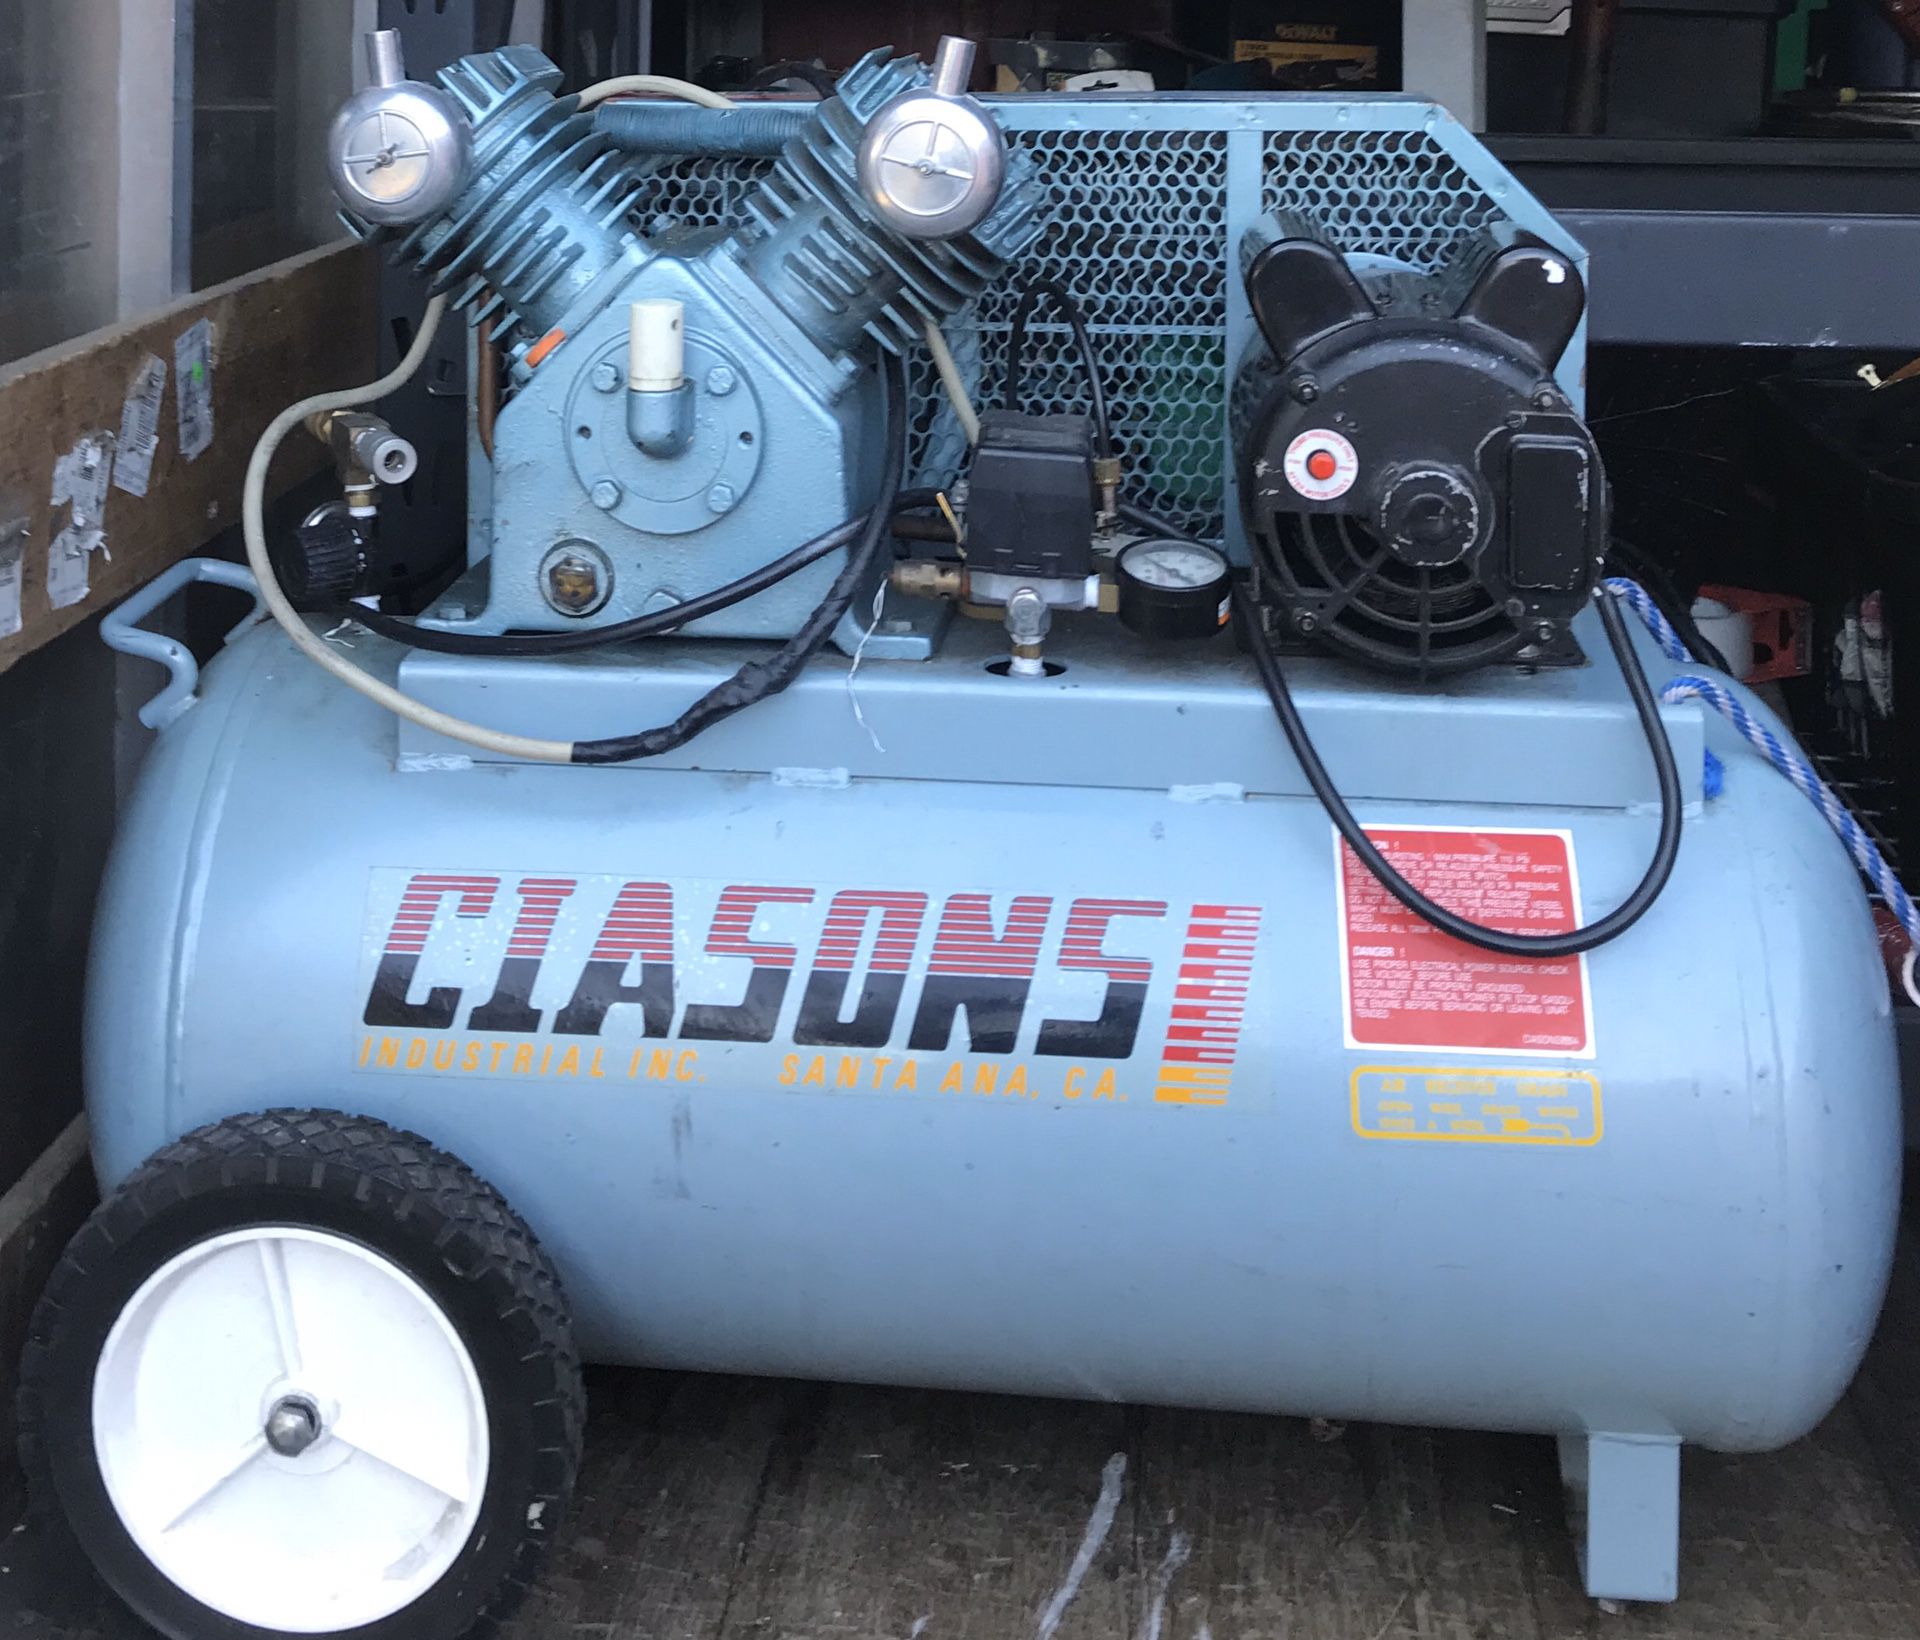 Ciasons Extra heavy duty high efficiency compressor